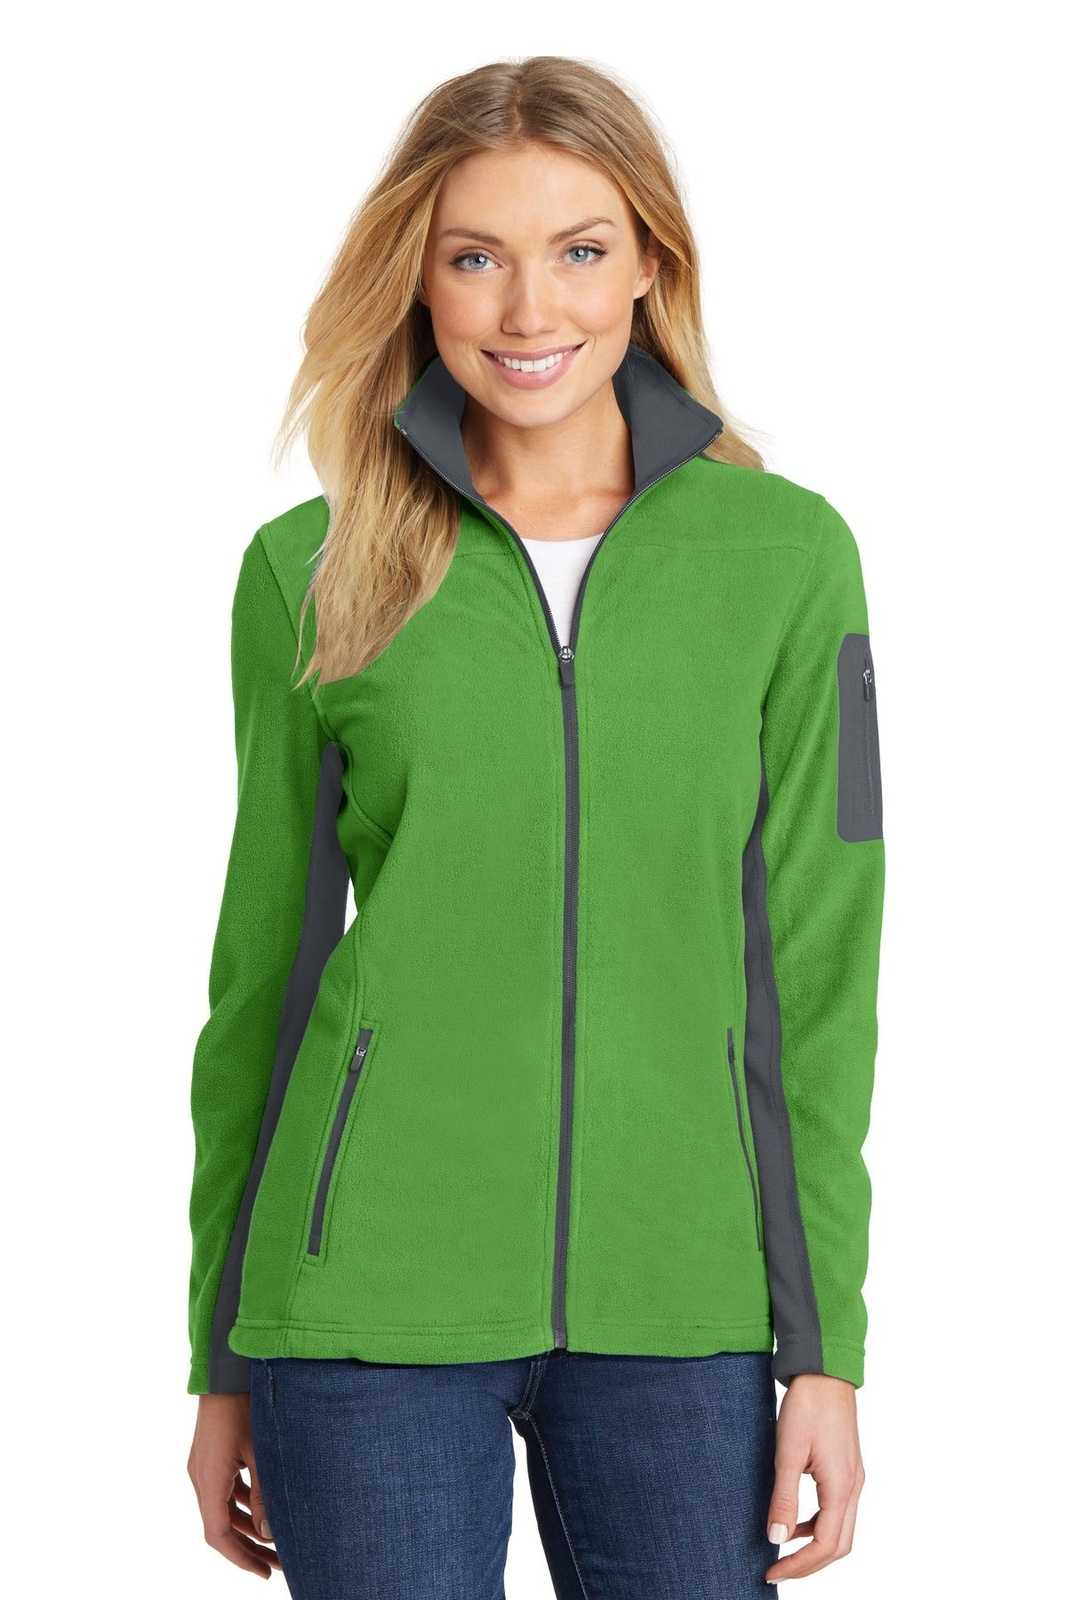 Port Authority L233 Ladies Summit Fleece Full-Zip Jacket - Vine Green Magnet - HIT a Double - 1